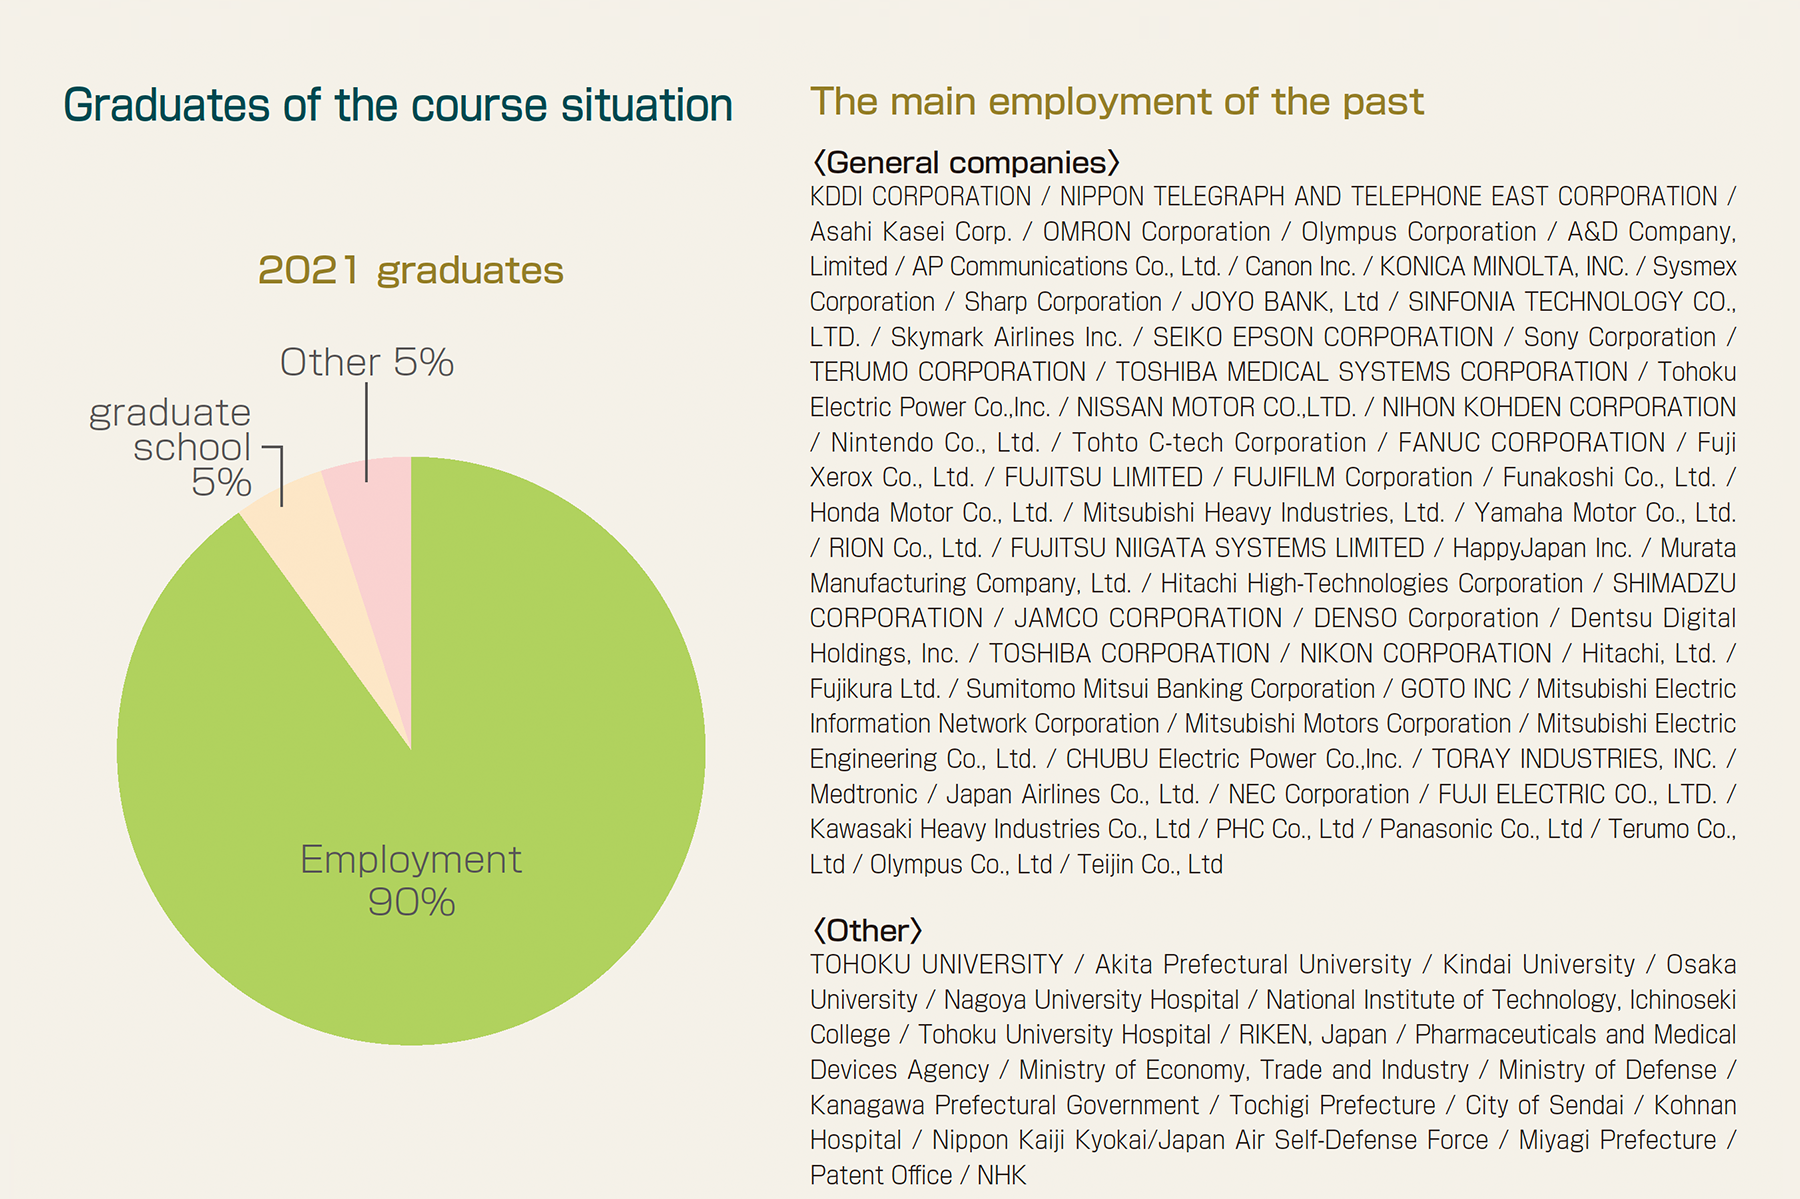 Career Options for Graduates